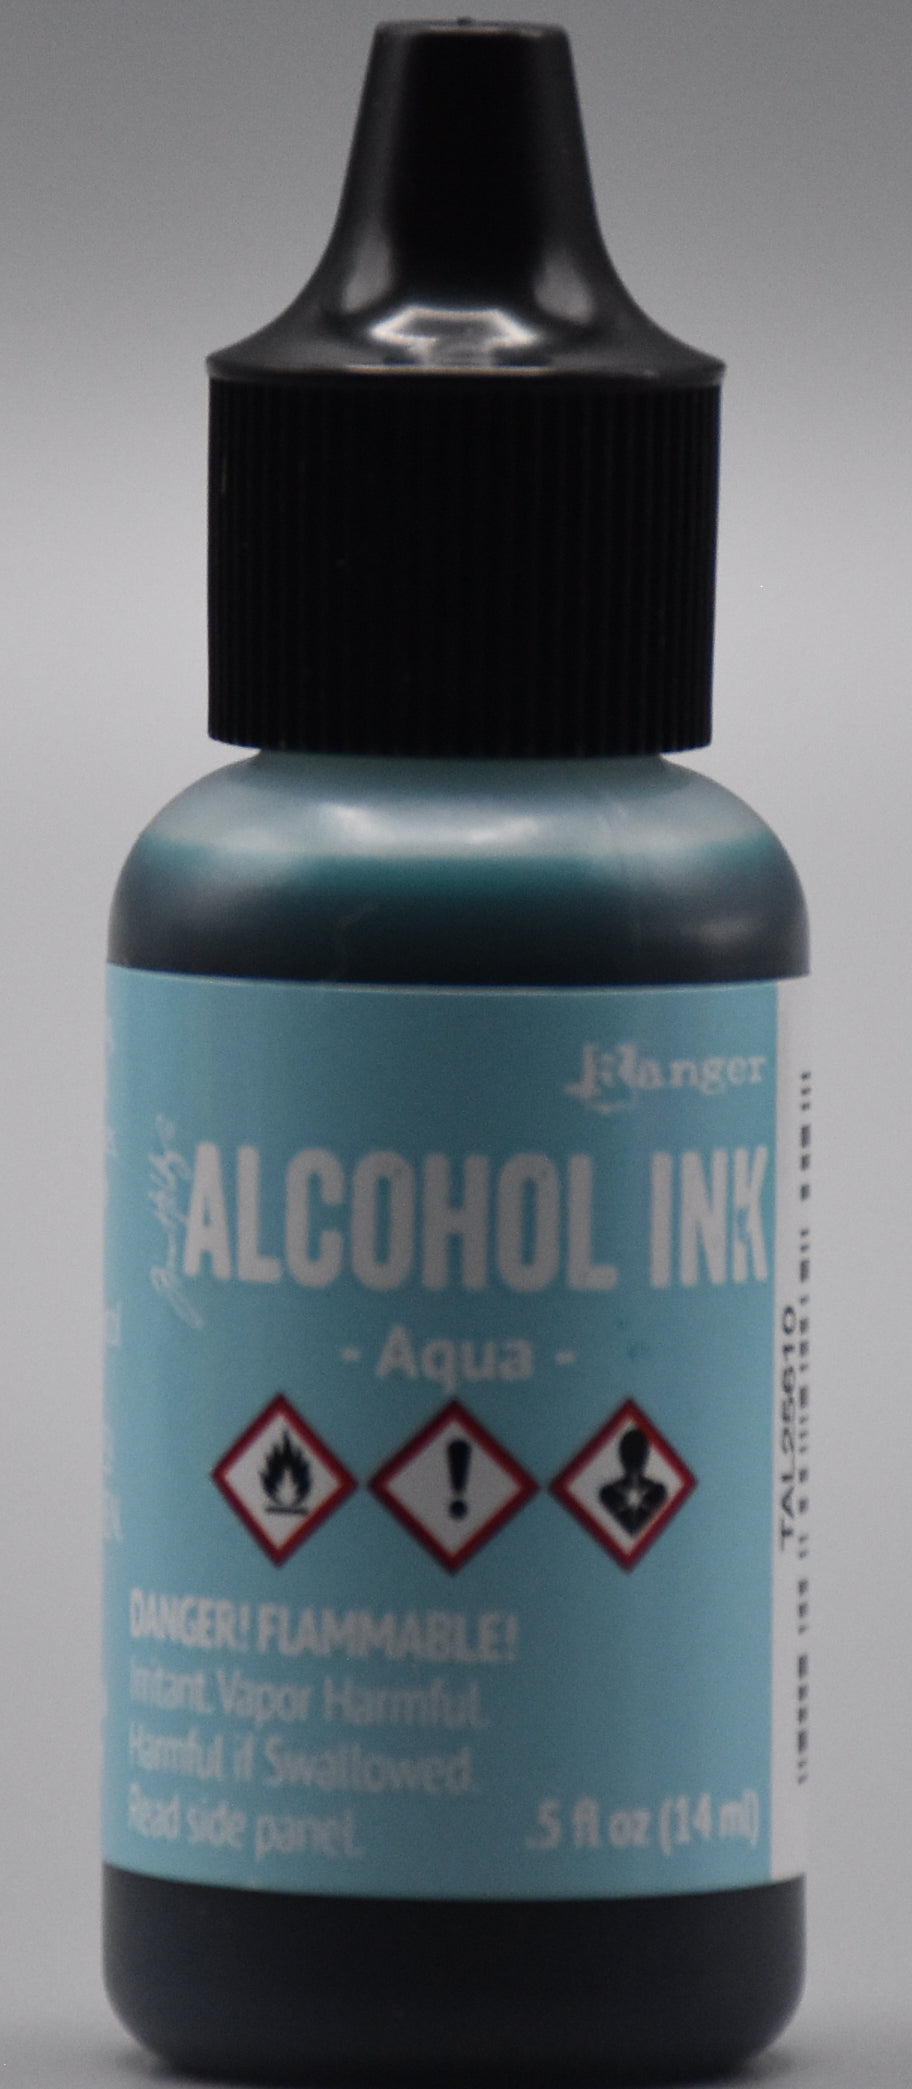 Ranger Alcohol Ink